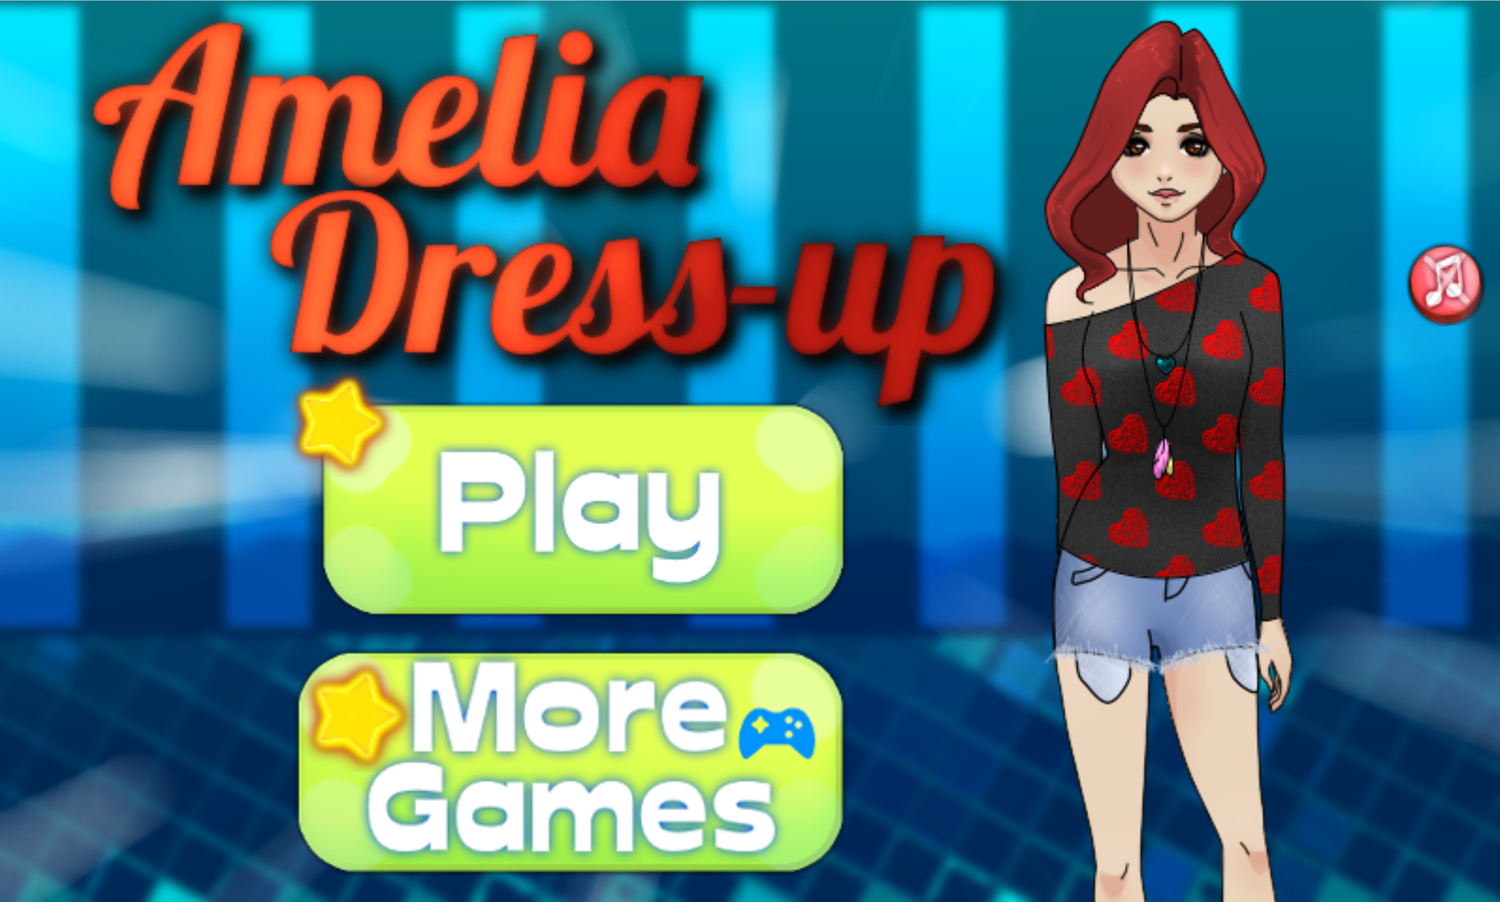 Amelia Dress Up Game Welcome Screen Screenshot.